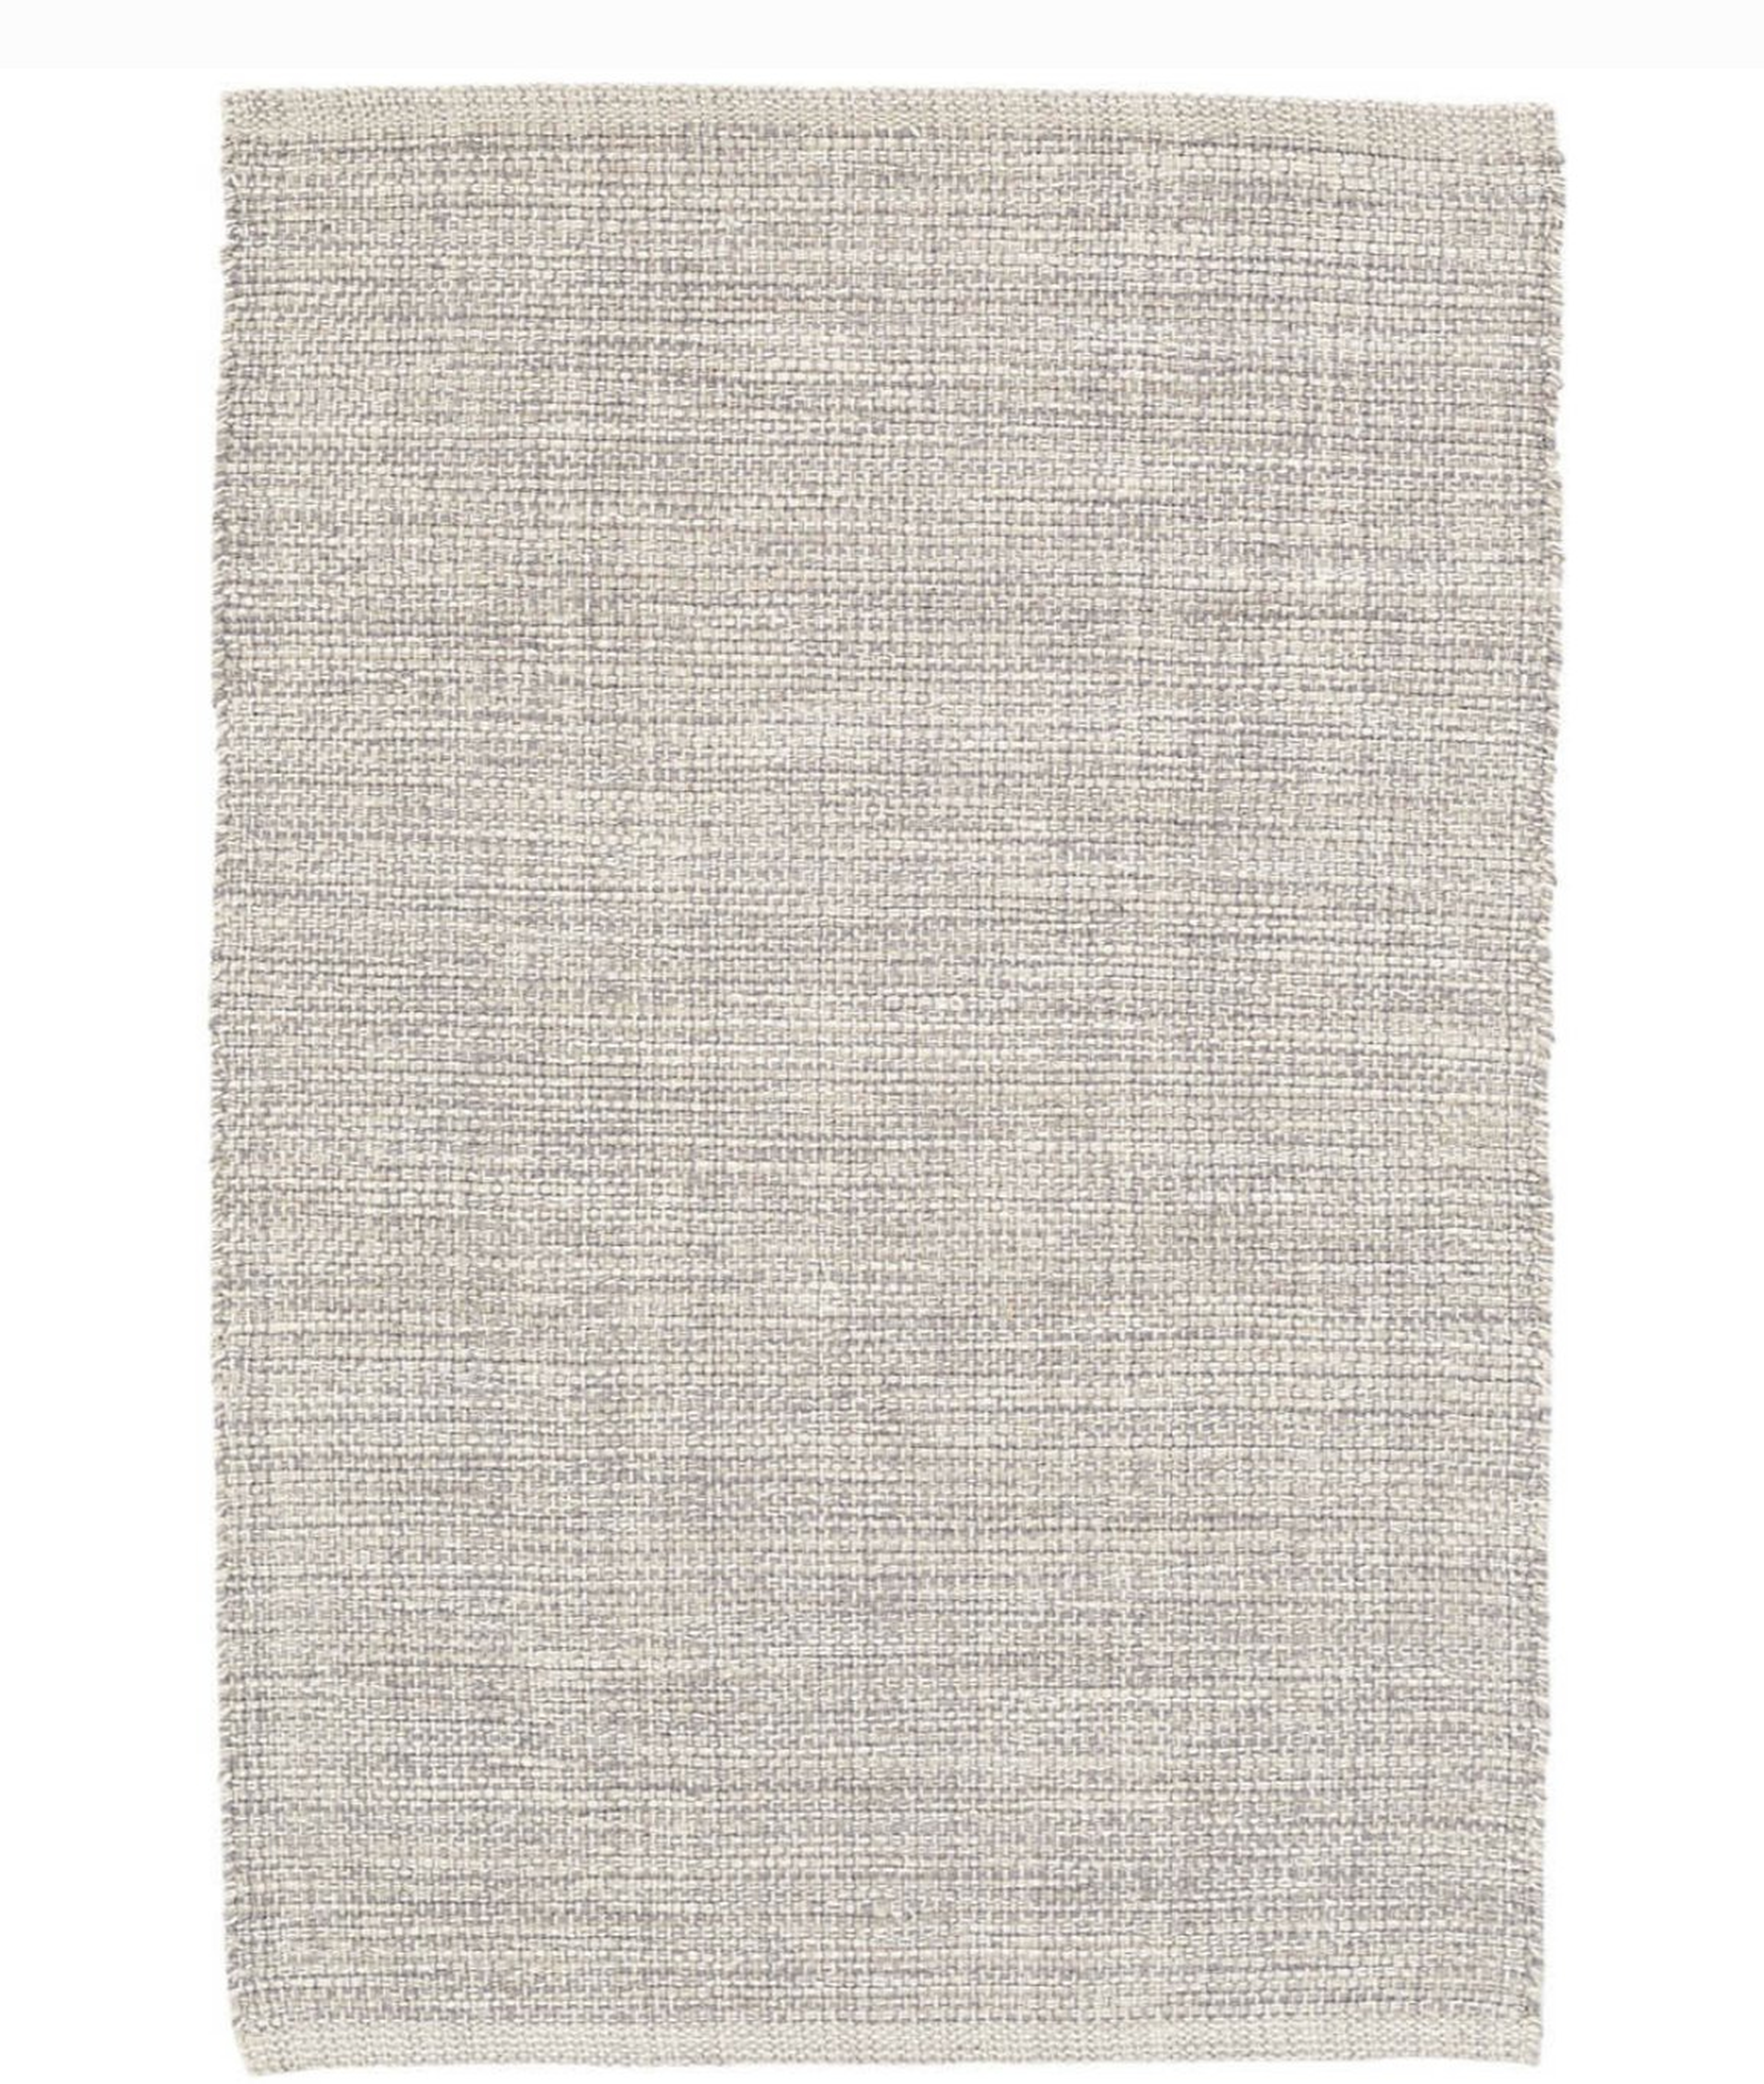 Marled Gray Woven Cotton Rug, 10' x 14' - Dash and Albert